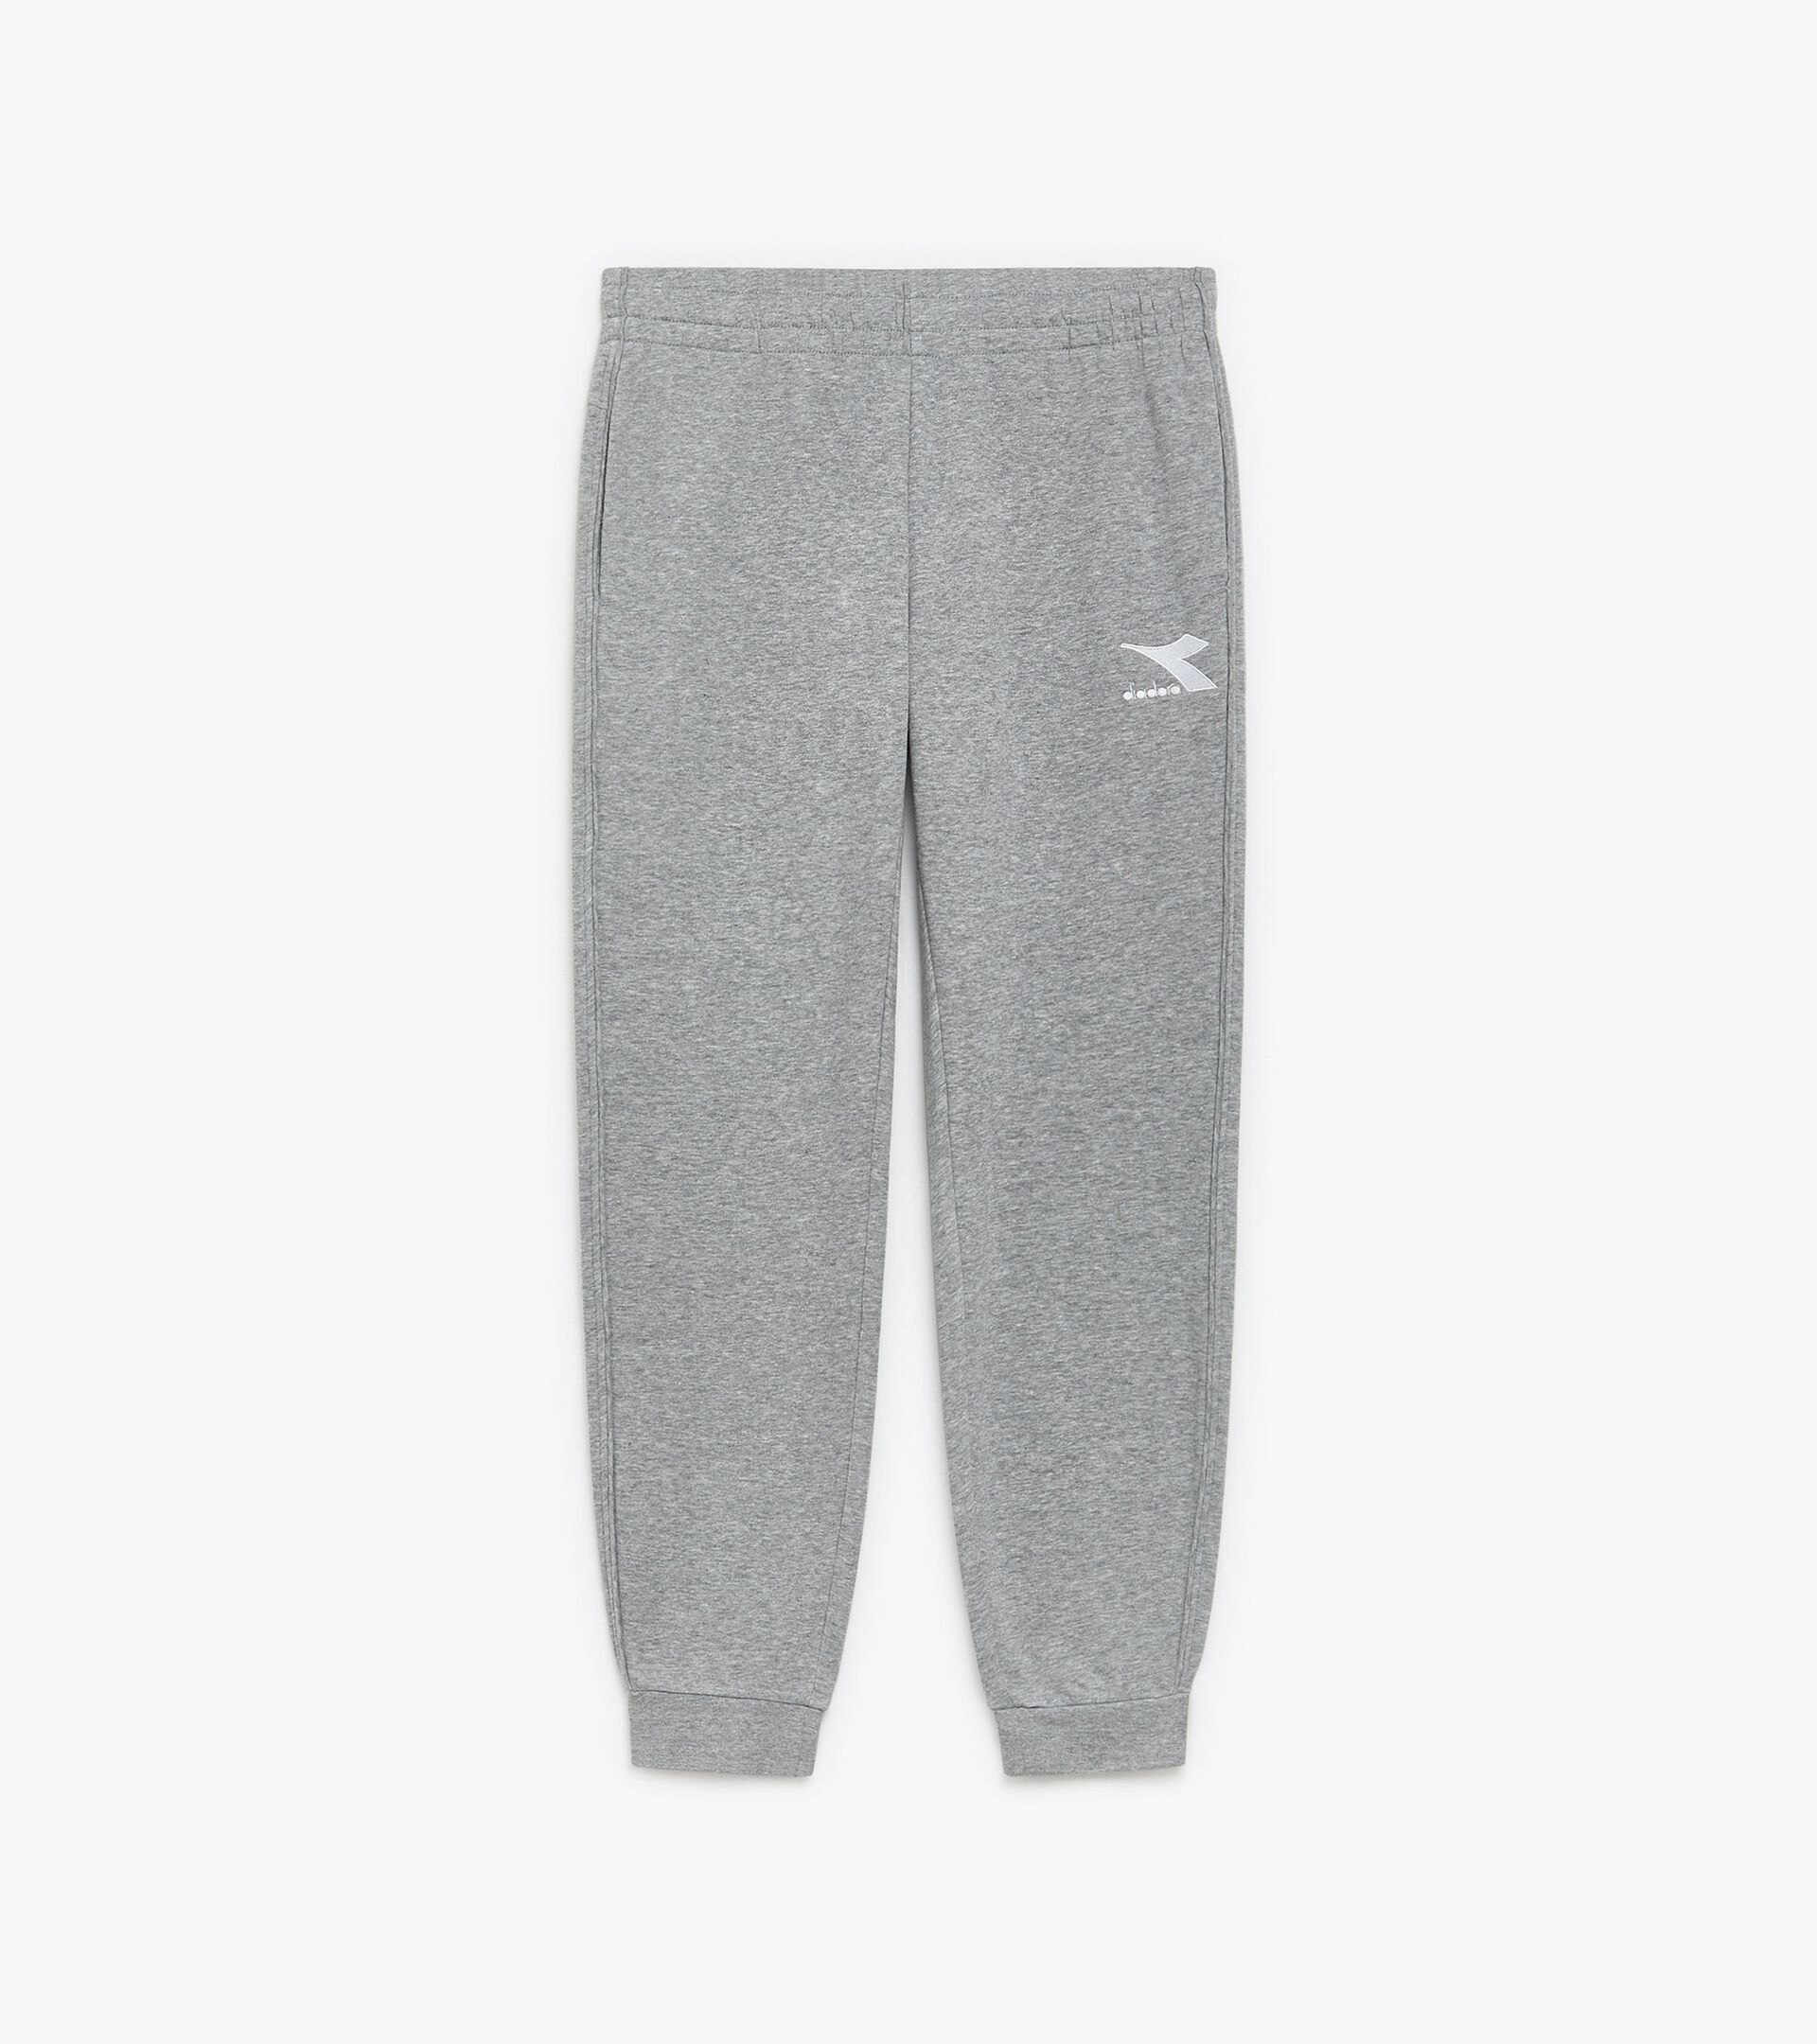 PANTS CUFF CORE Sports brushed fleece trousers - Men - Diadora Online Store